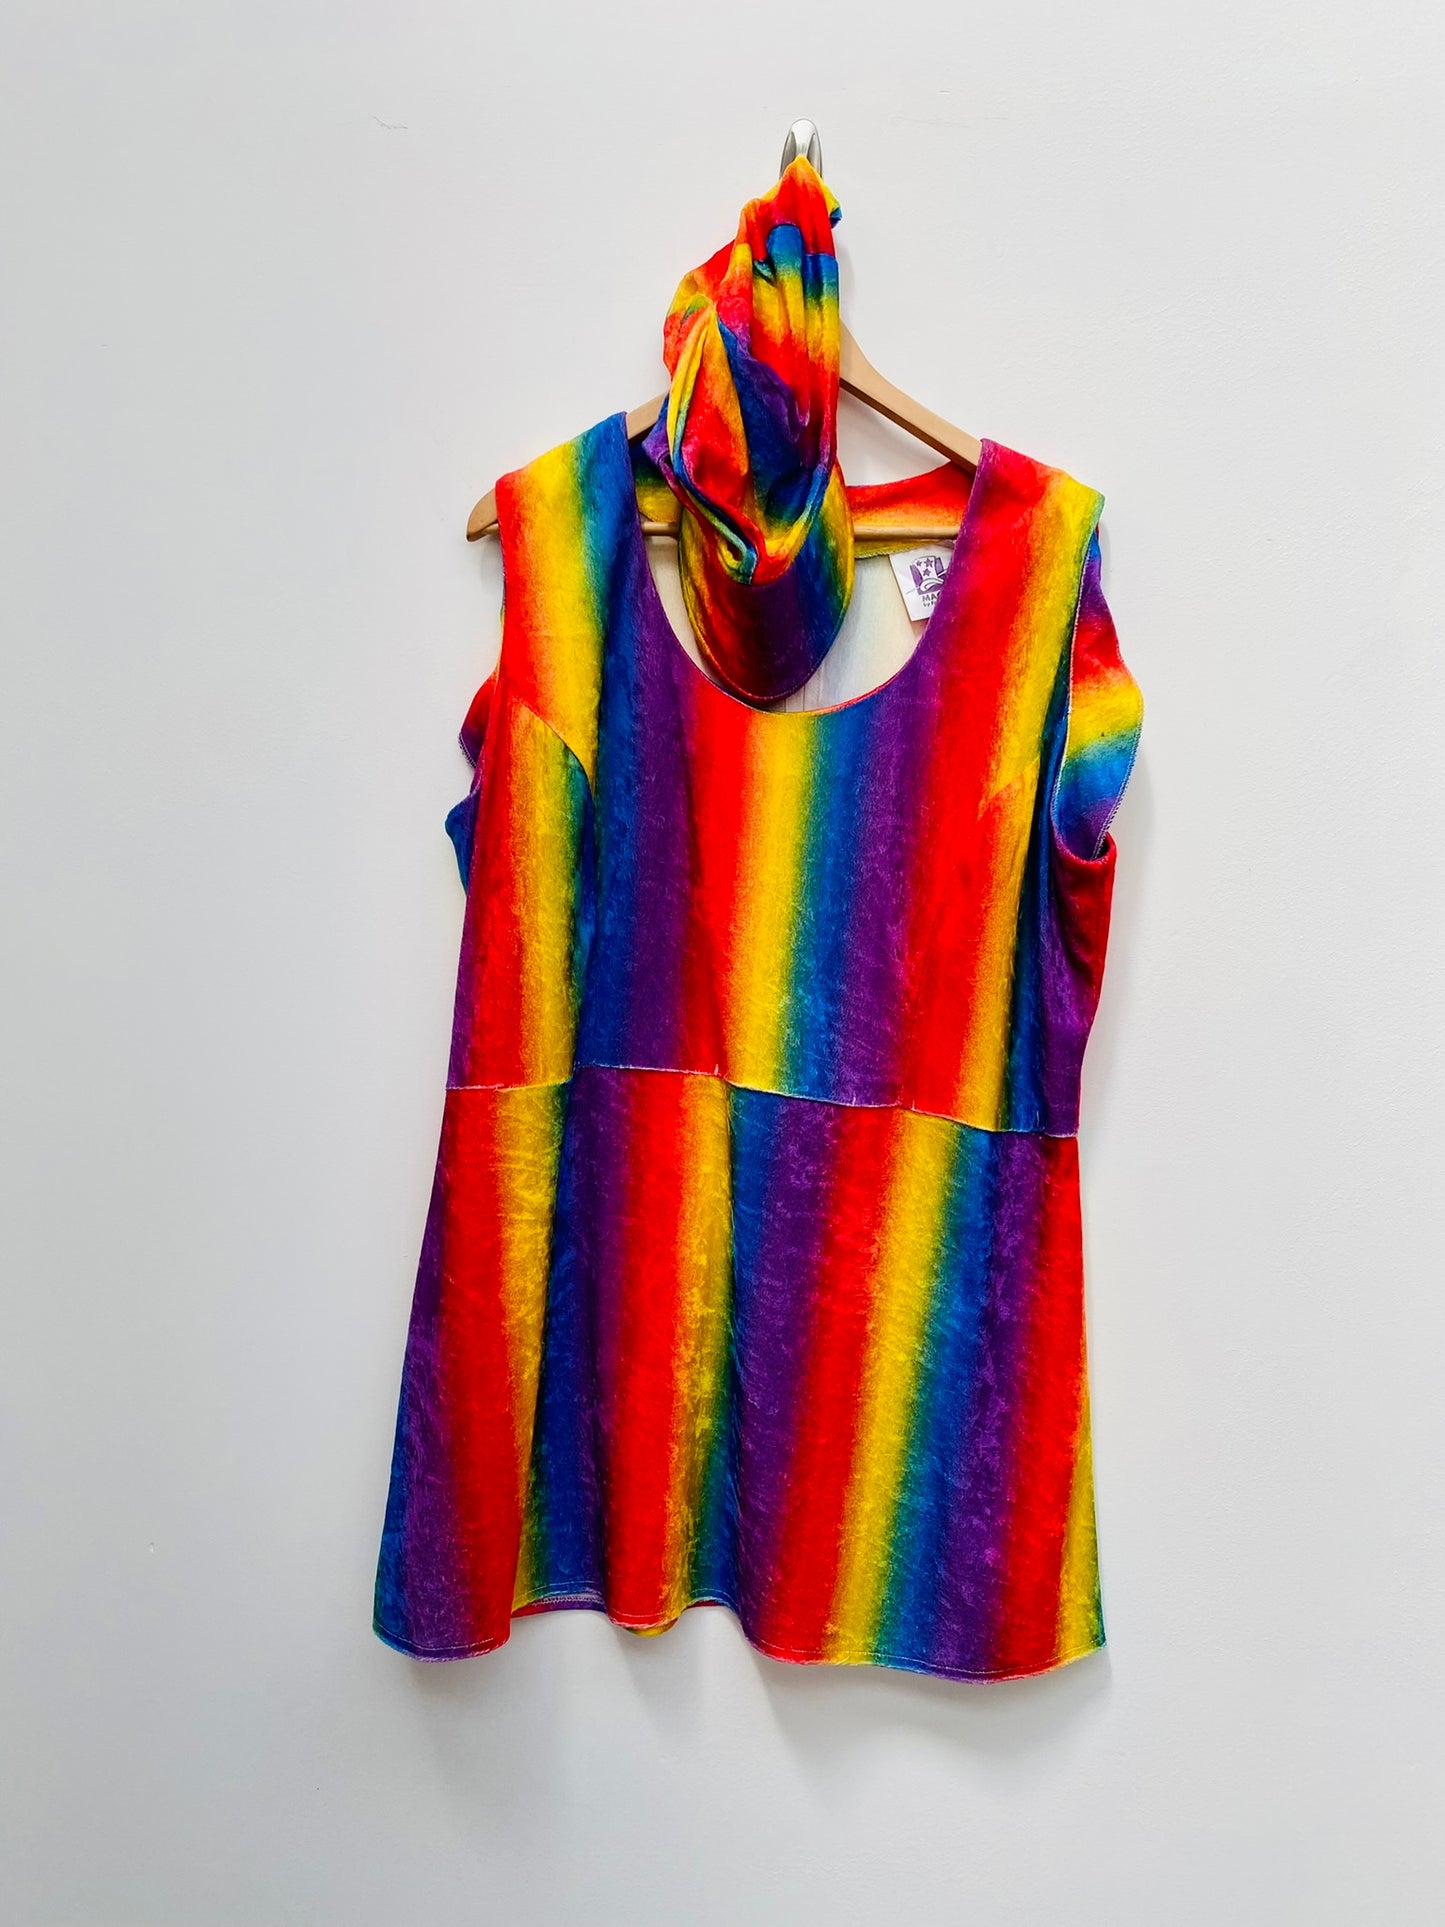 60s-70s style PRIDE Rainbow Mini Dress size EUR48 20/22 - Ex Hire Fancy Dress Costume